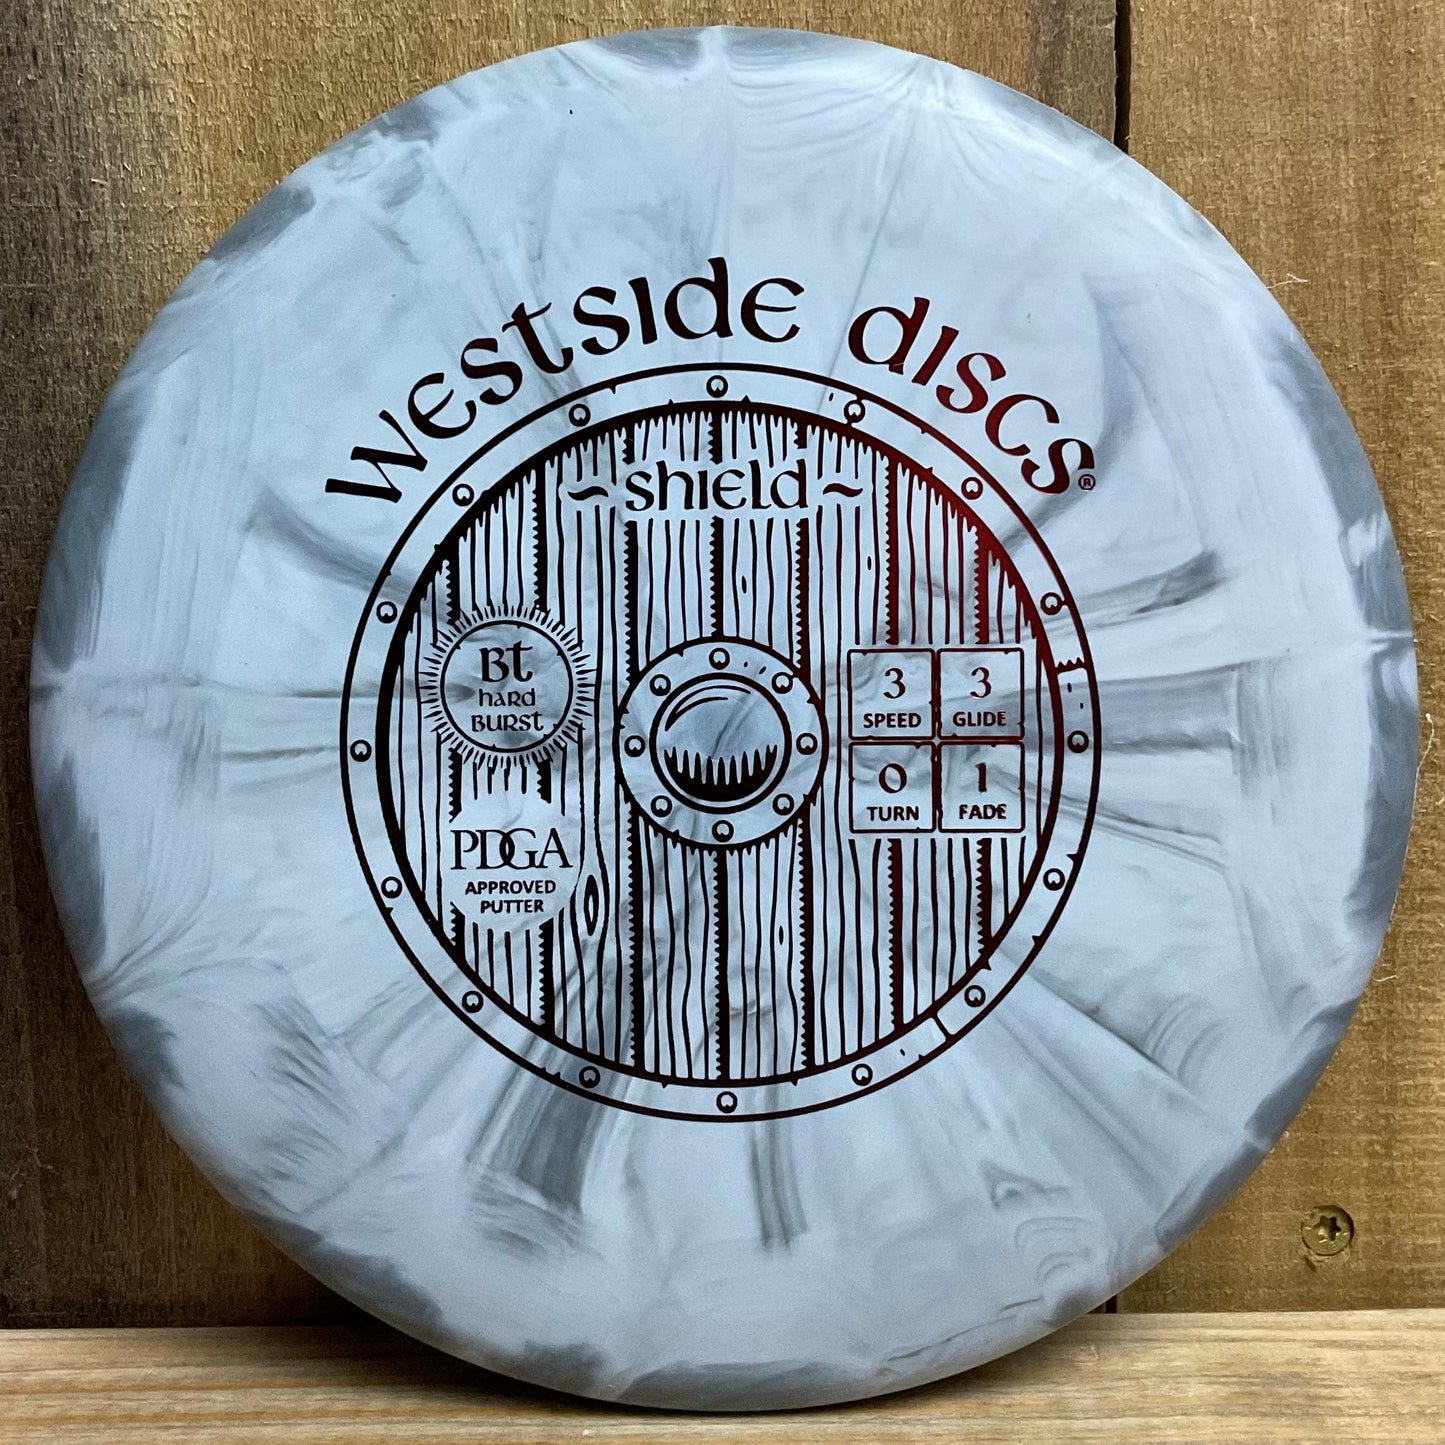 Westside BT Hard Shield